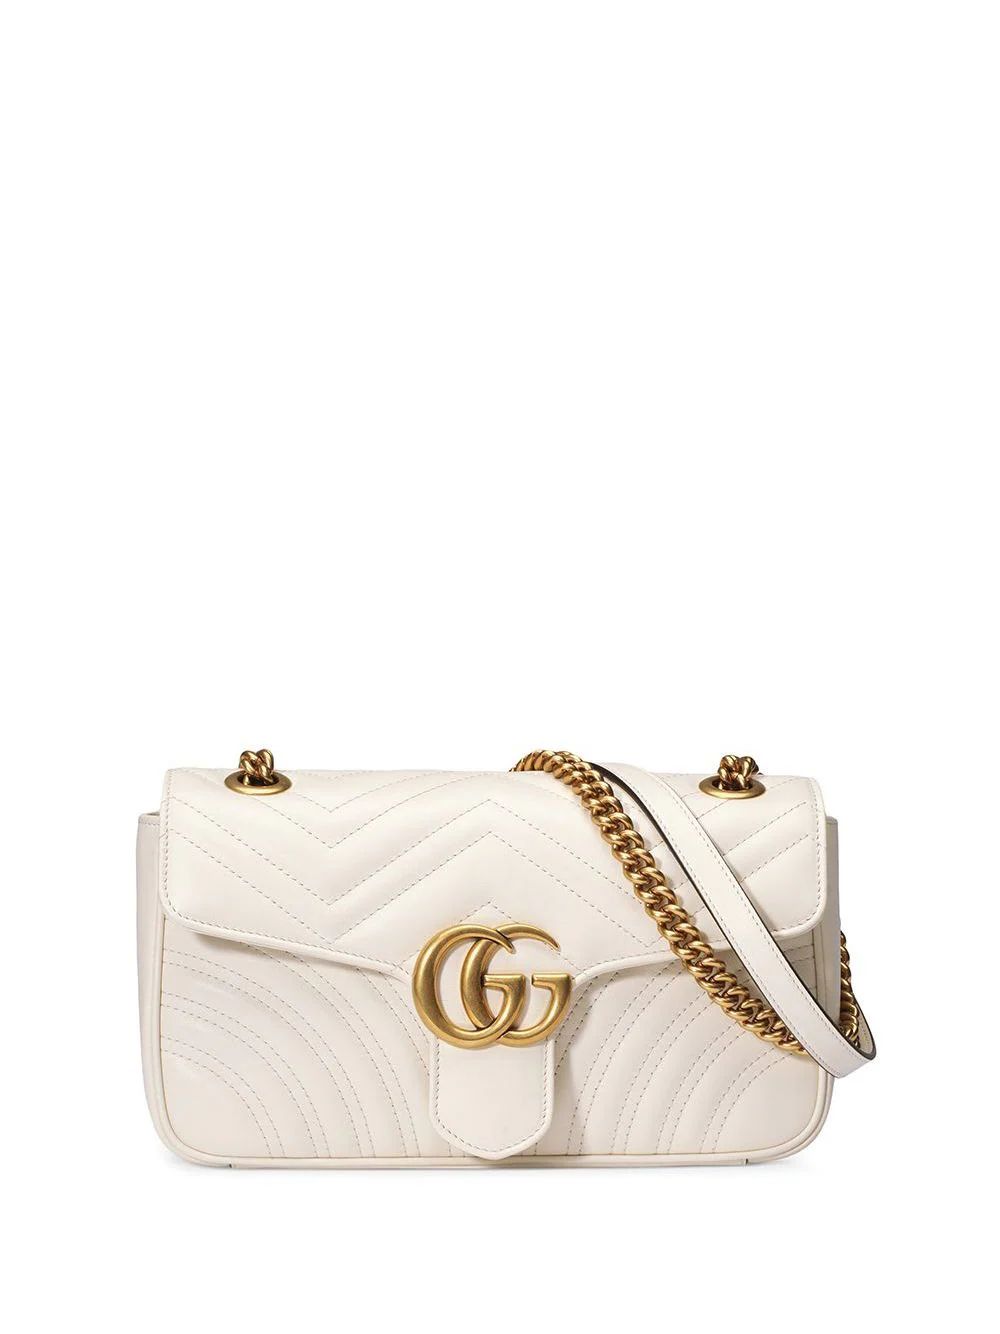 GG Marmont small matelassé shoulder bag | Farfetch Global